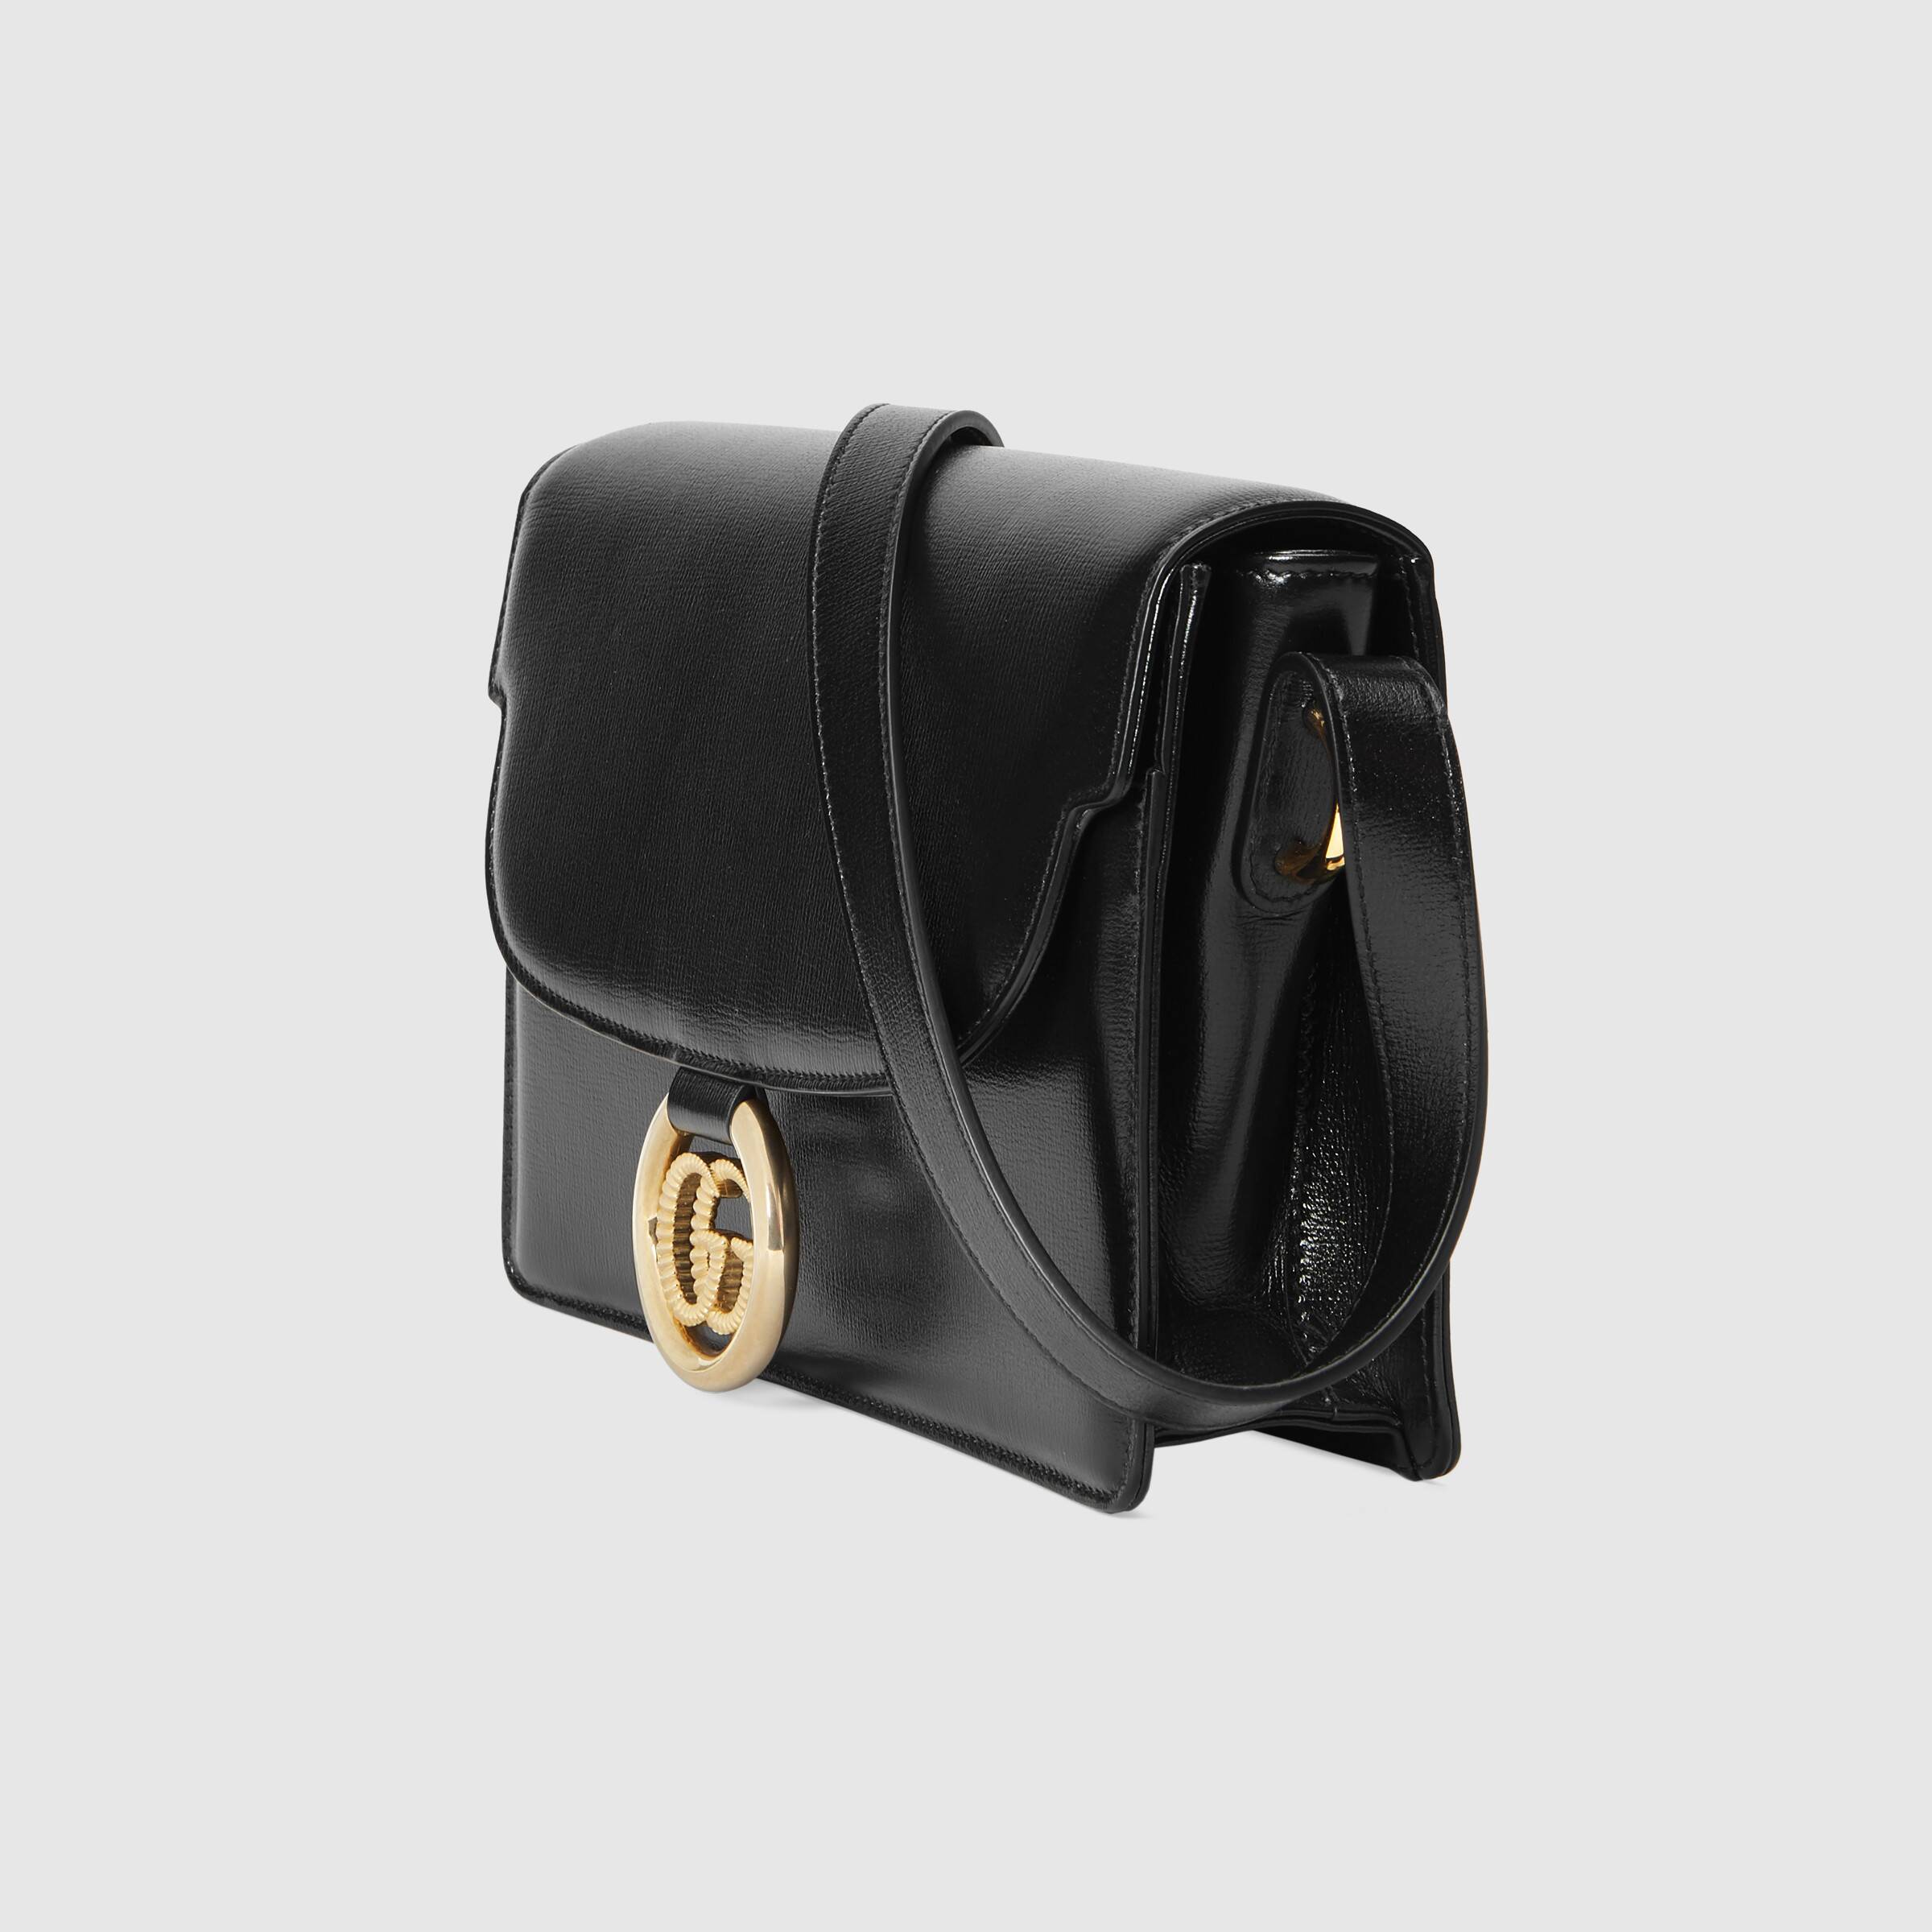 Gucci Small Leather Shoulder Bag Black